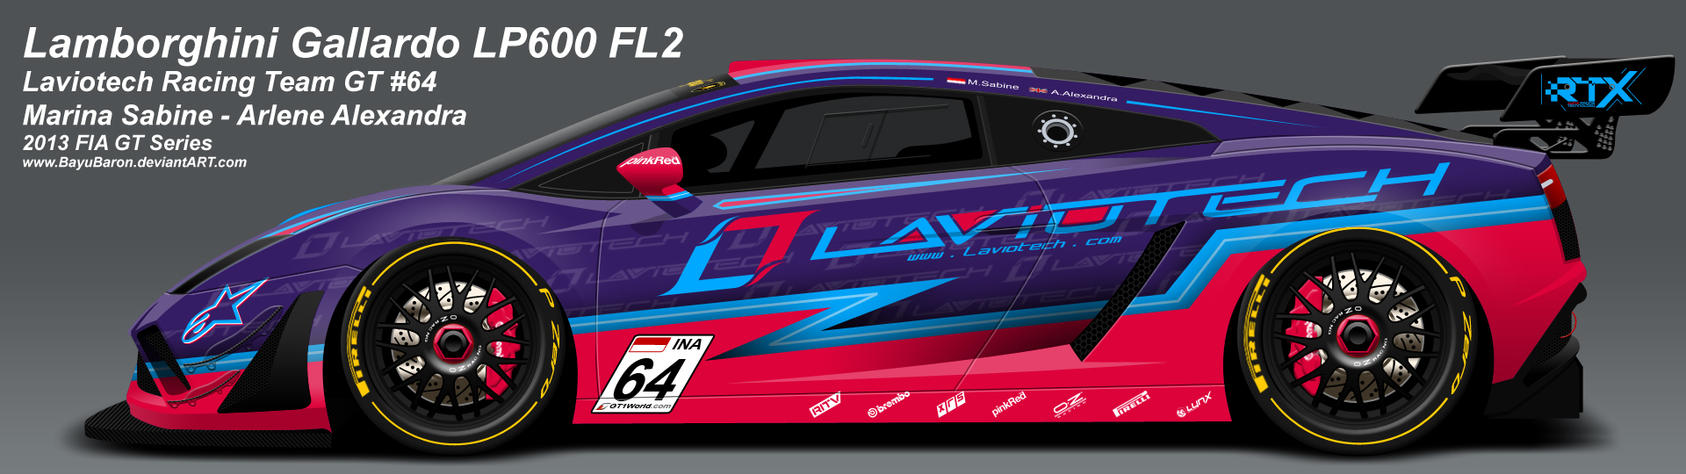 2013 Laviotech Racing Team GT Lamborghini Gallardo By BayuBaron On